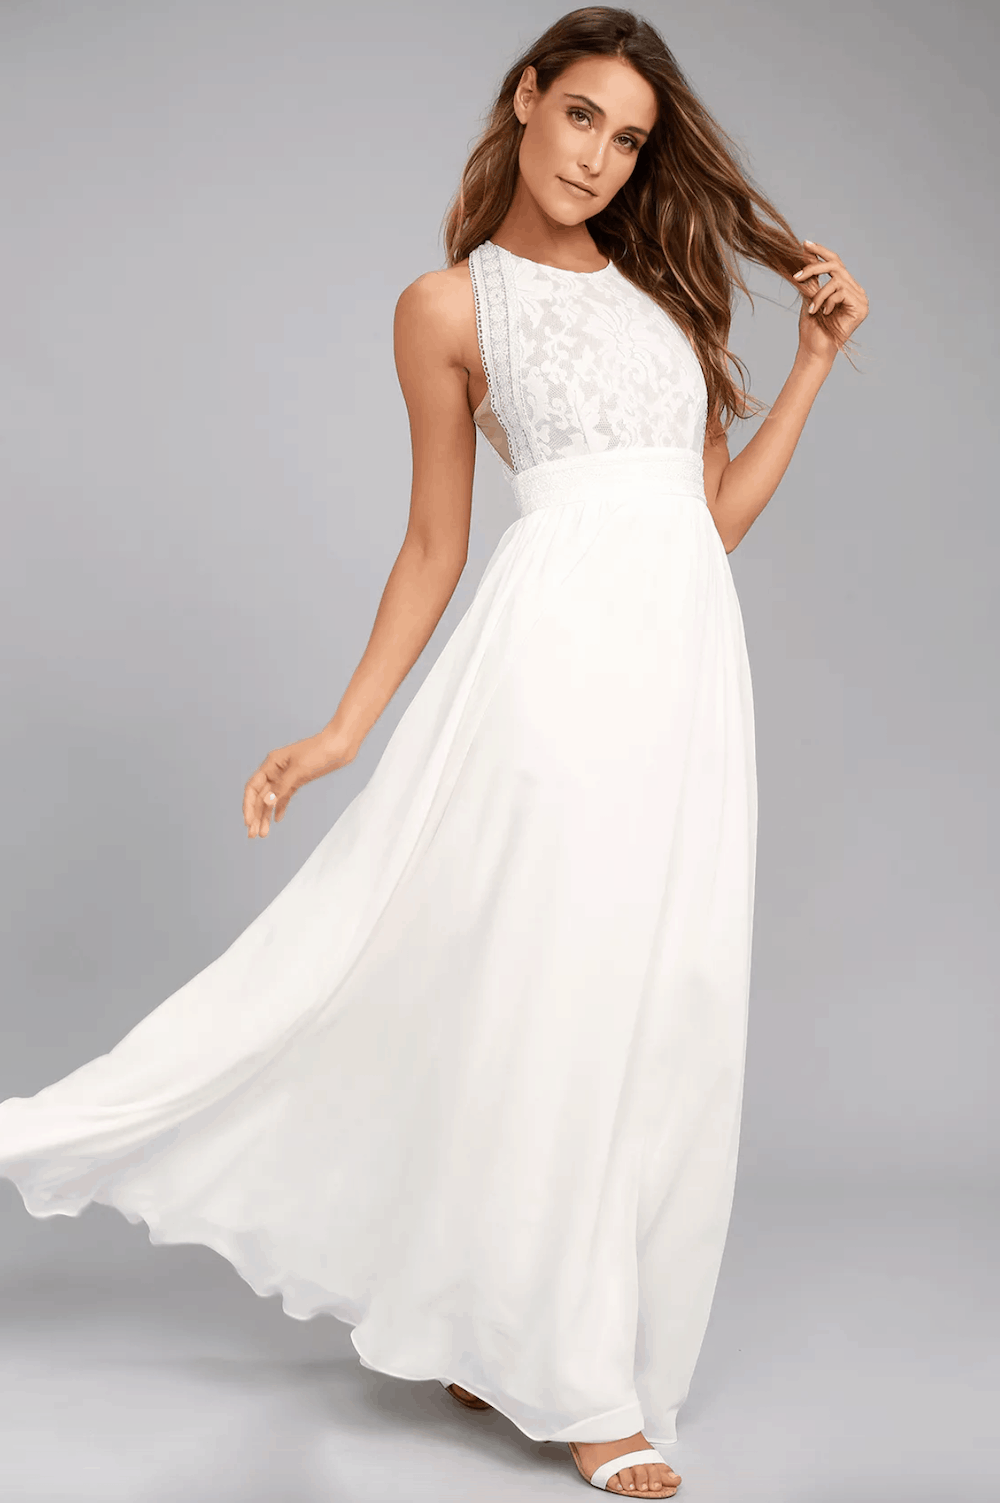 Cheap Affordable Elegant Wedding Dresses White Lace Lulus Bridal Gown Brides Tight Wedding Budget 2